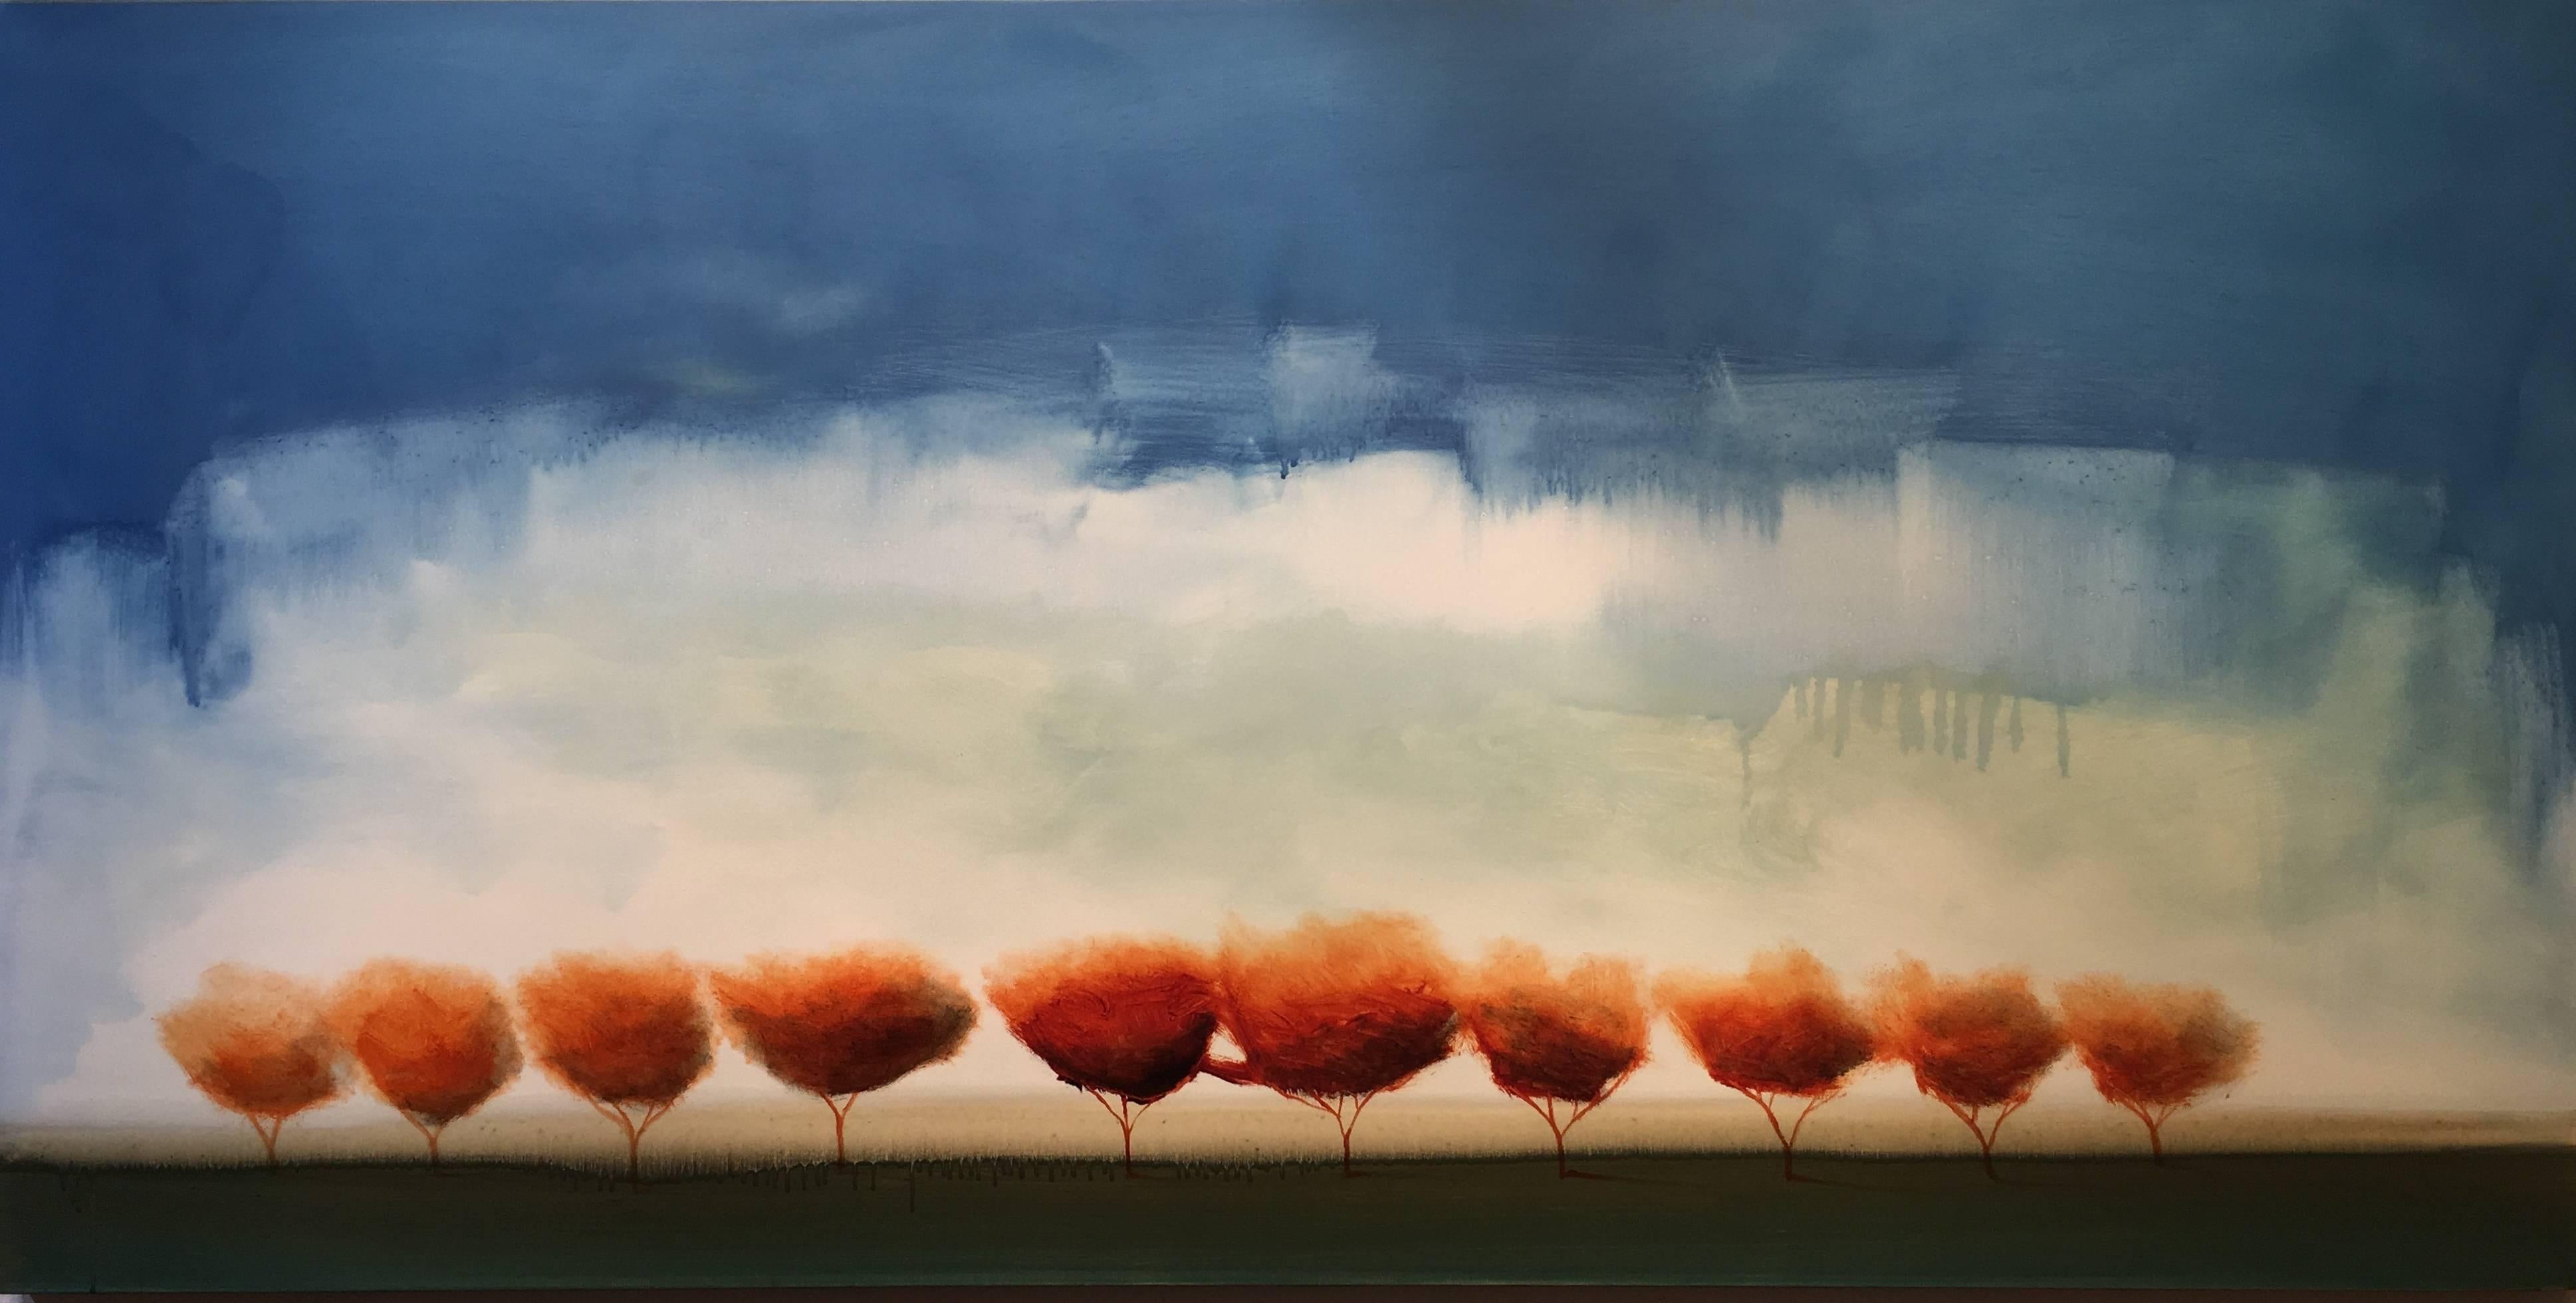 Shane Townley Landscape Painting - "Crimson Life"